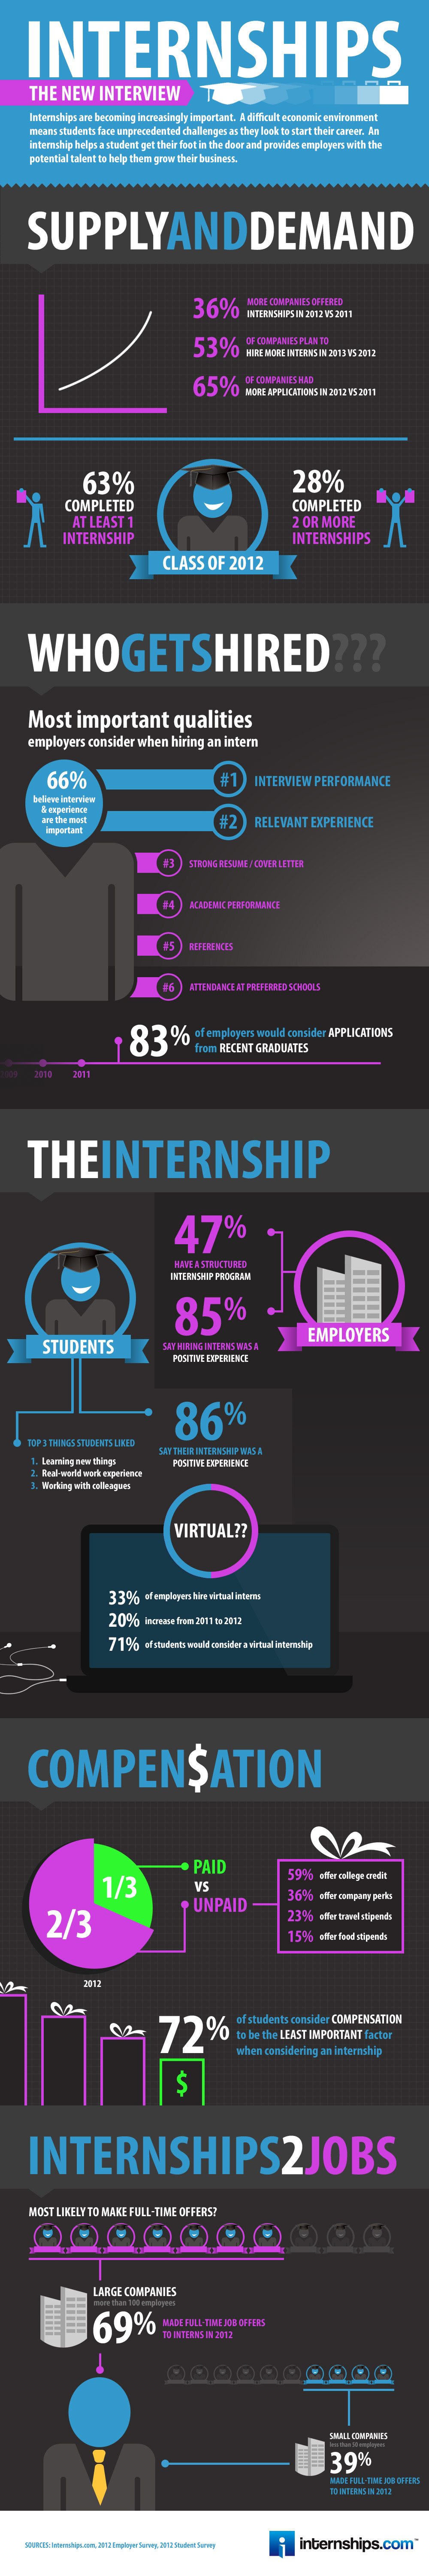 Internships infographic 2012